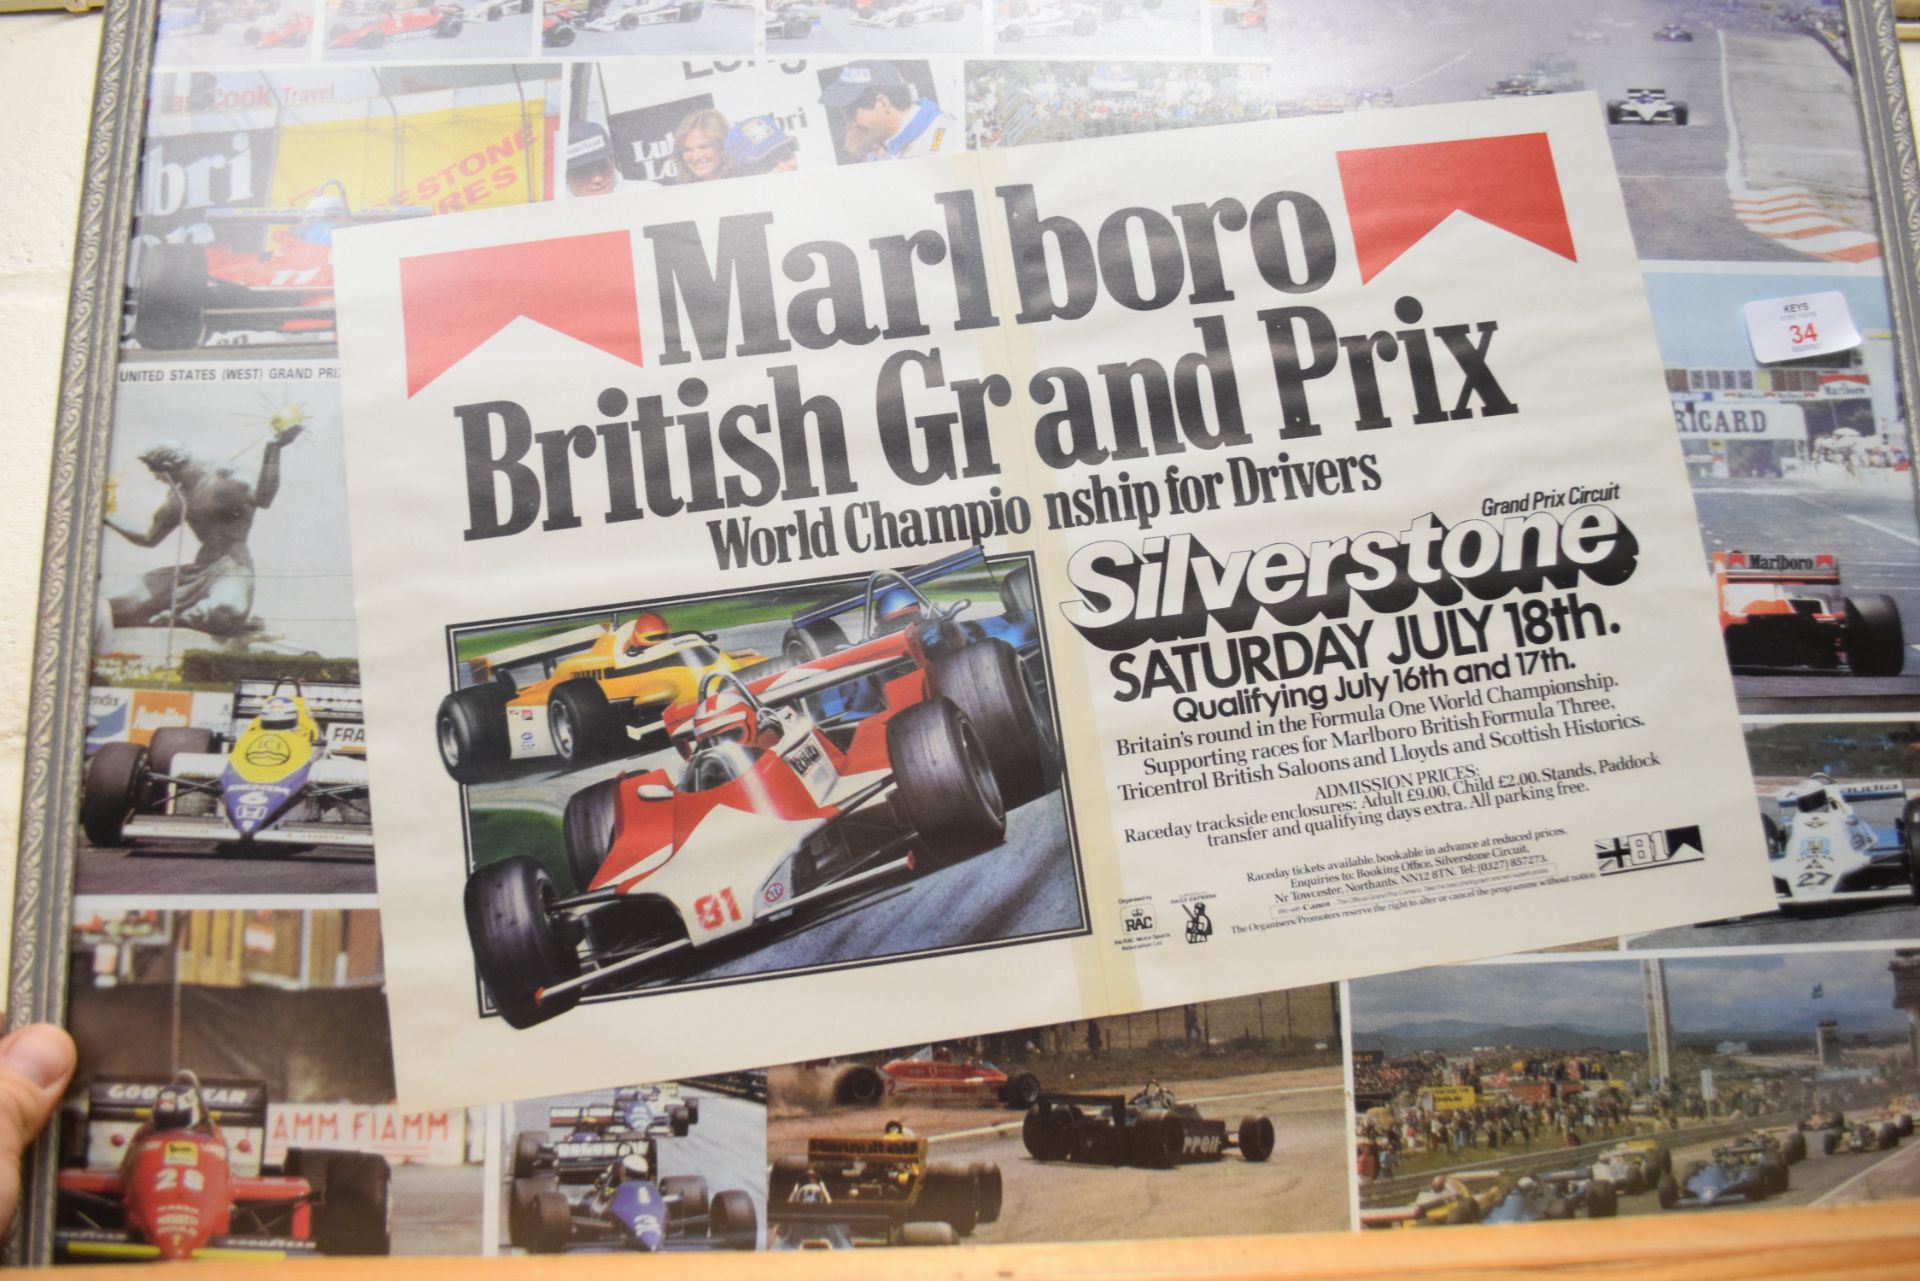 Marlboro British Grand Prix print, width 60cm - Image 2 of 2